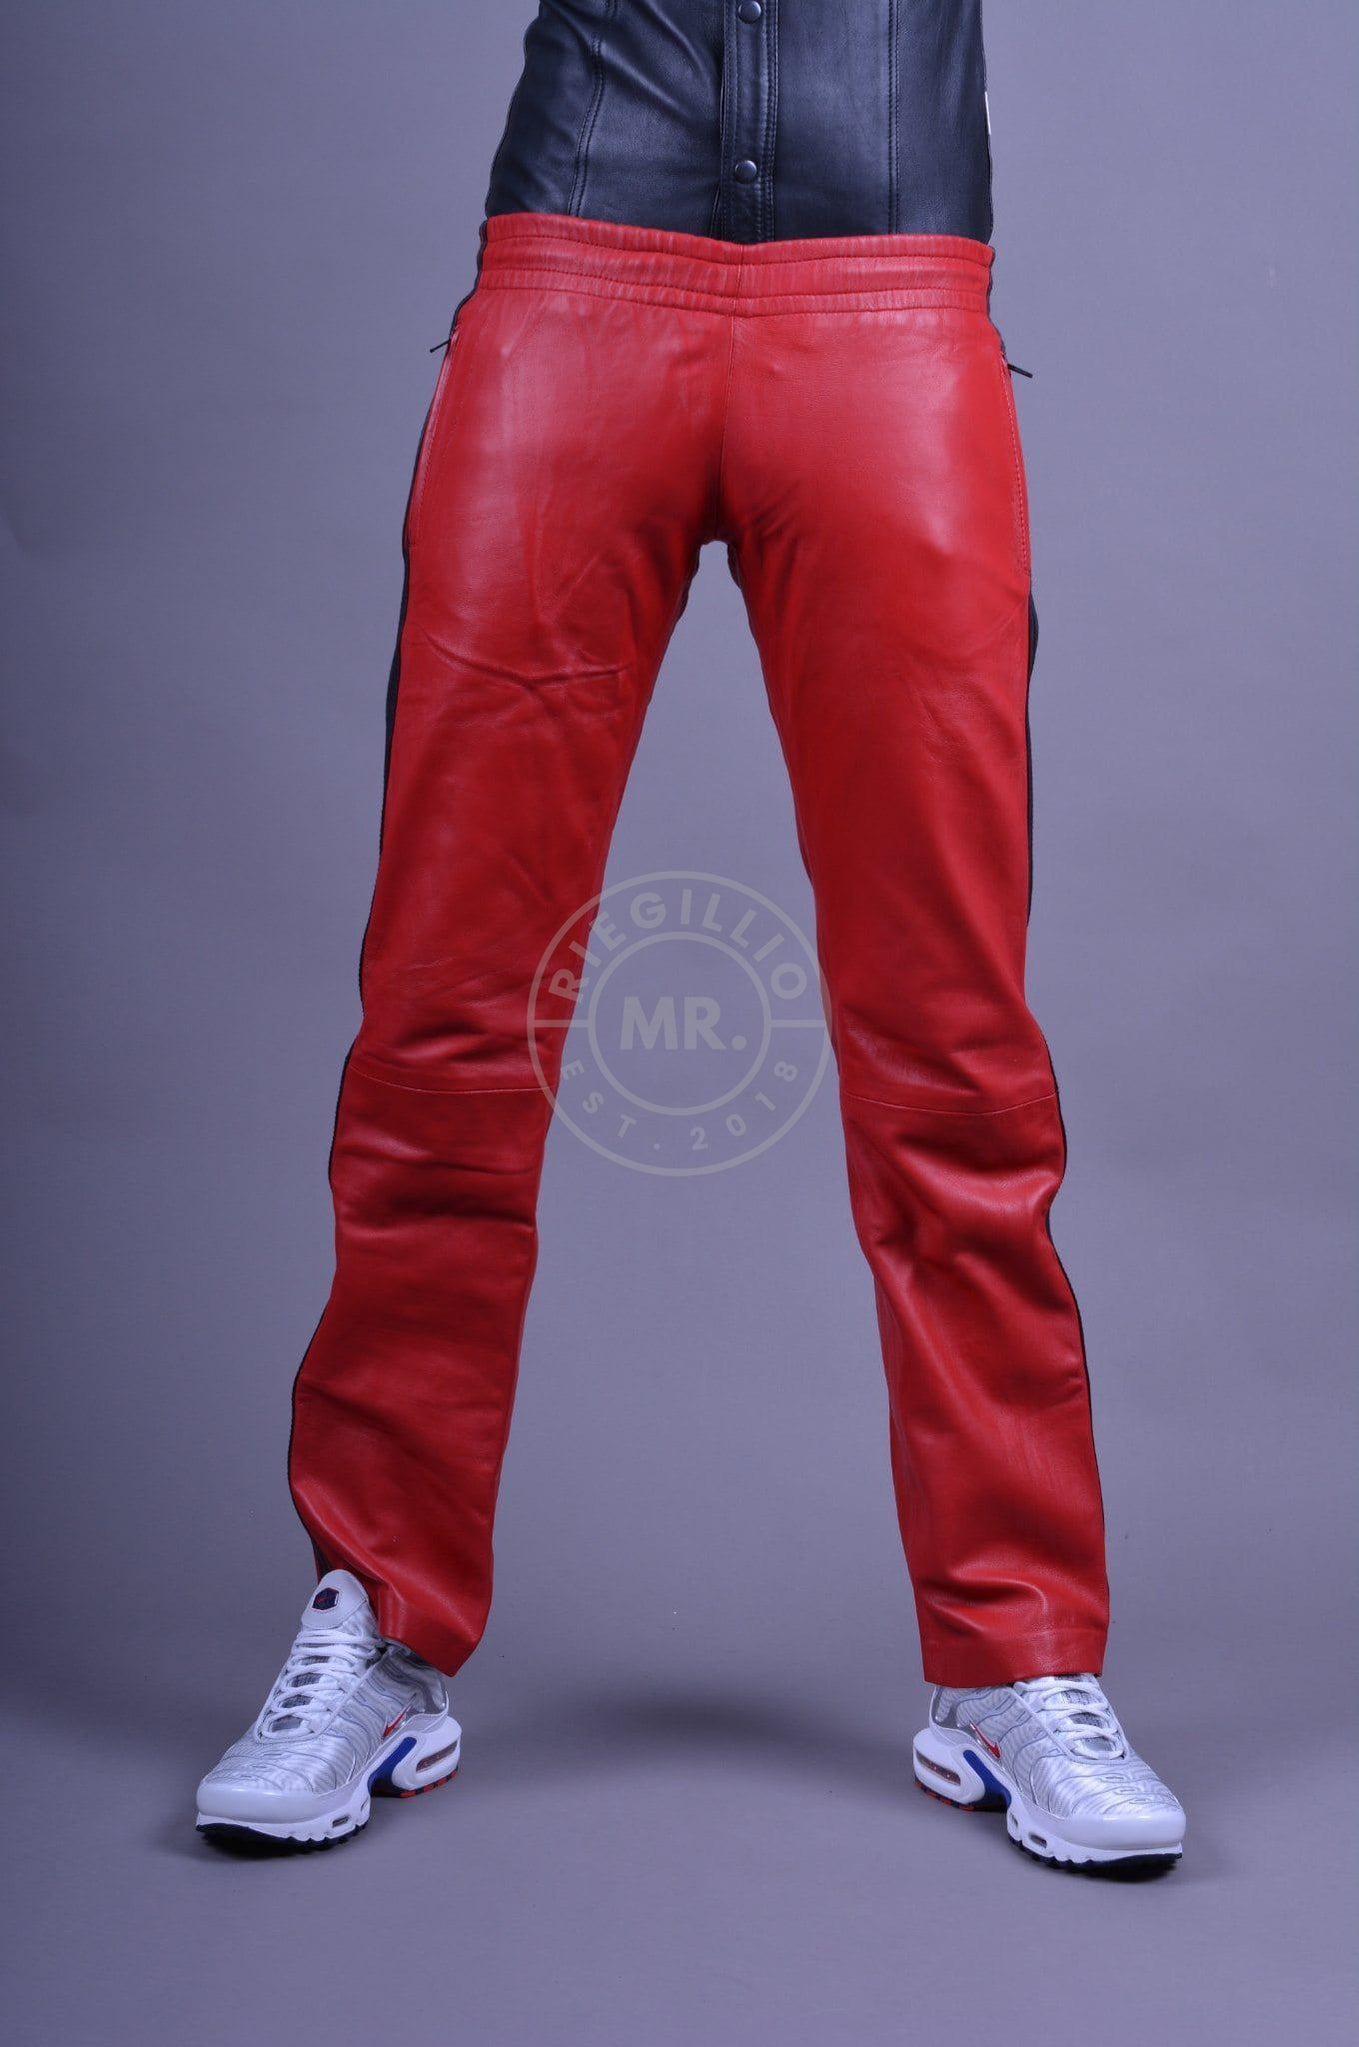 Red Leather Pants - BLACK STRIPES at MR. Riegillio